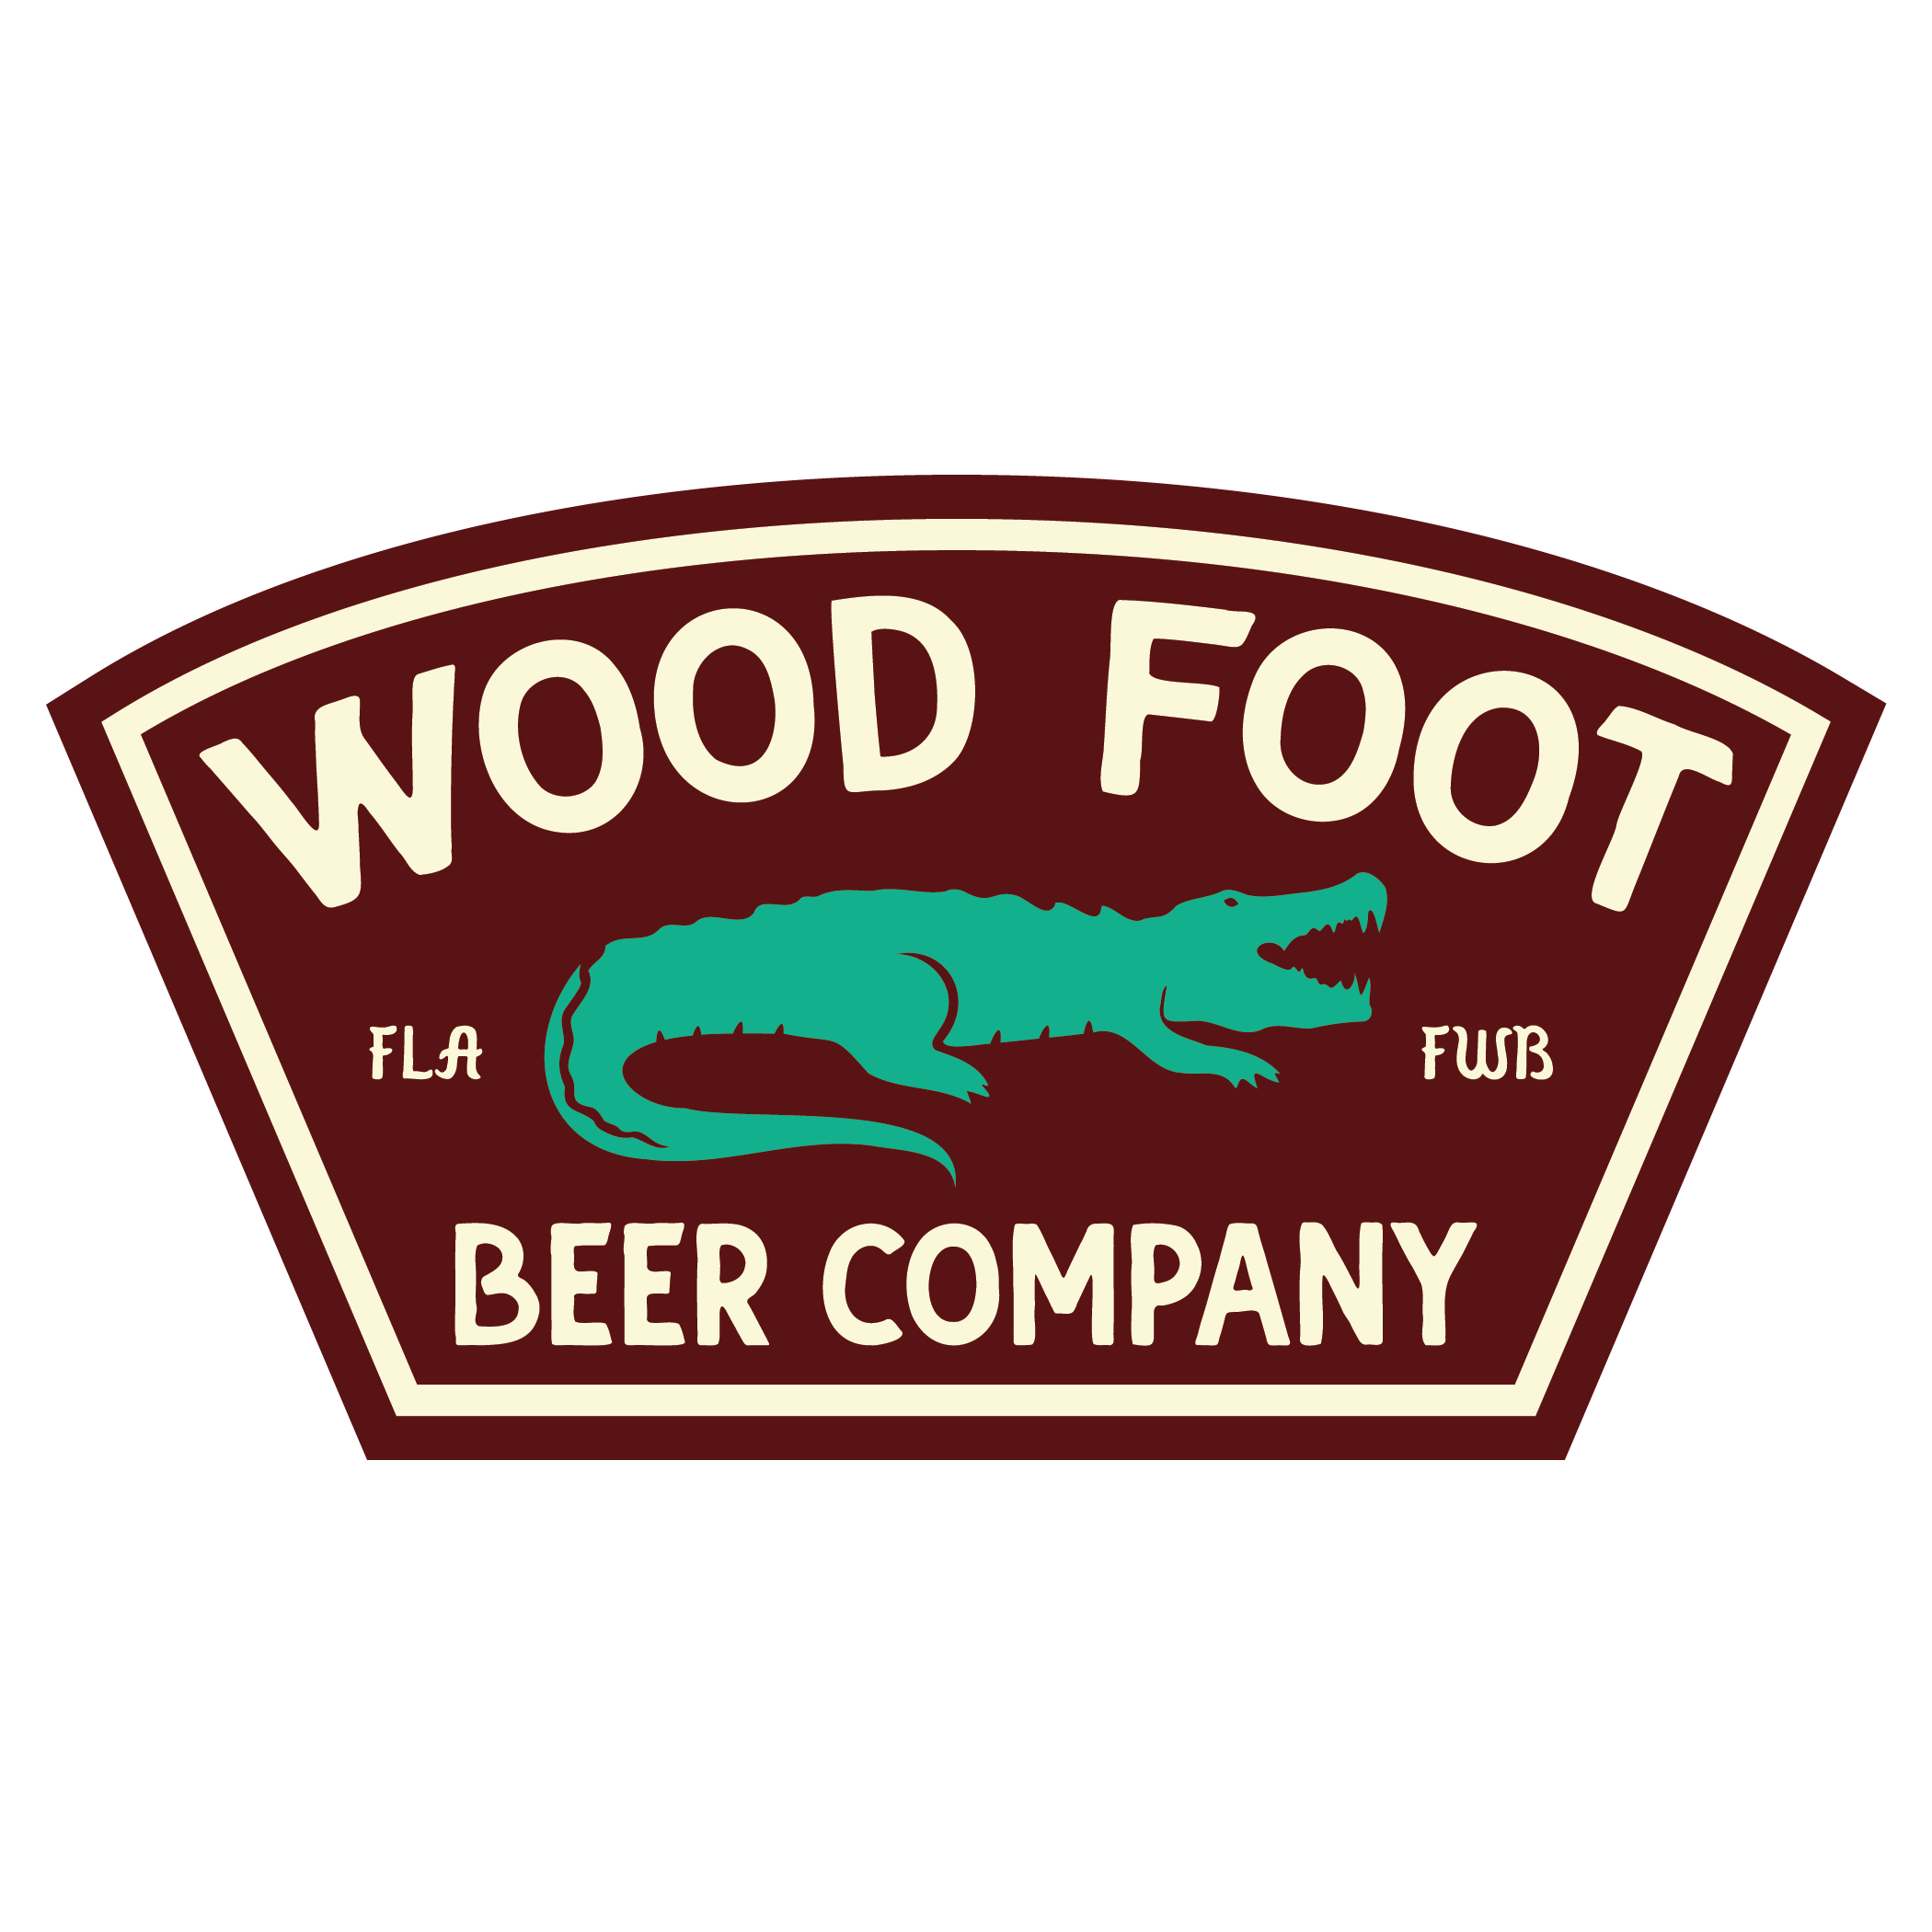 woodfoot